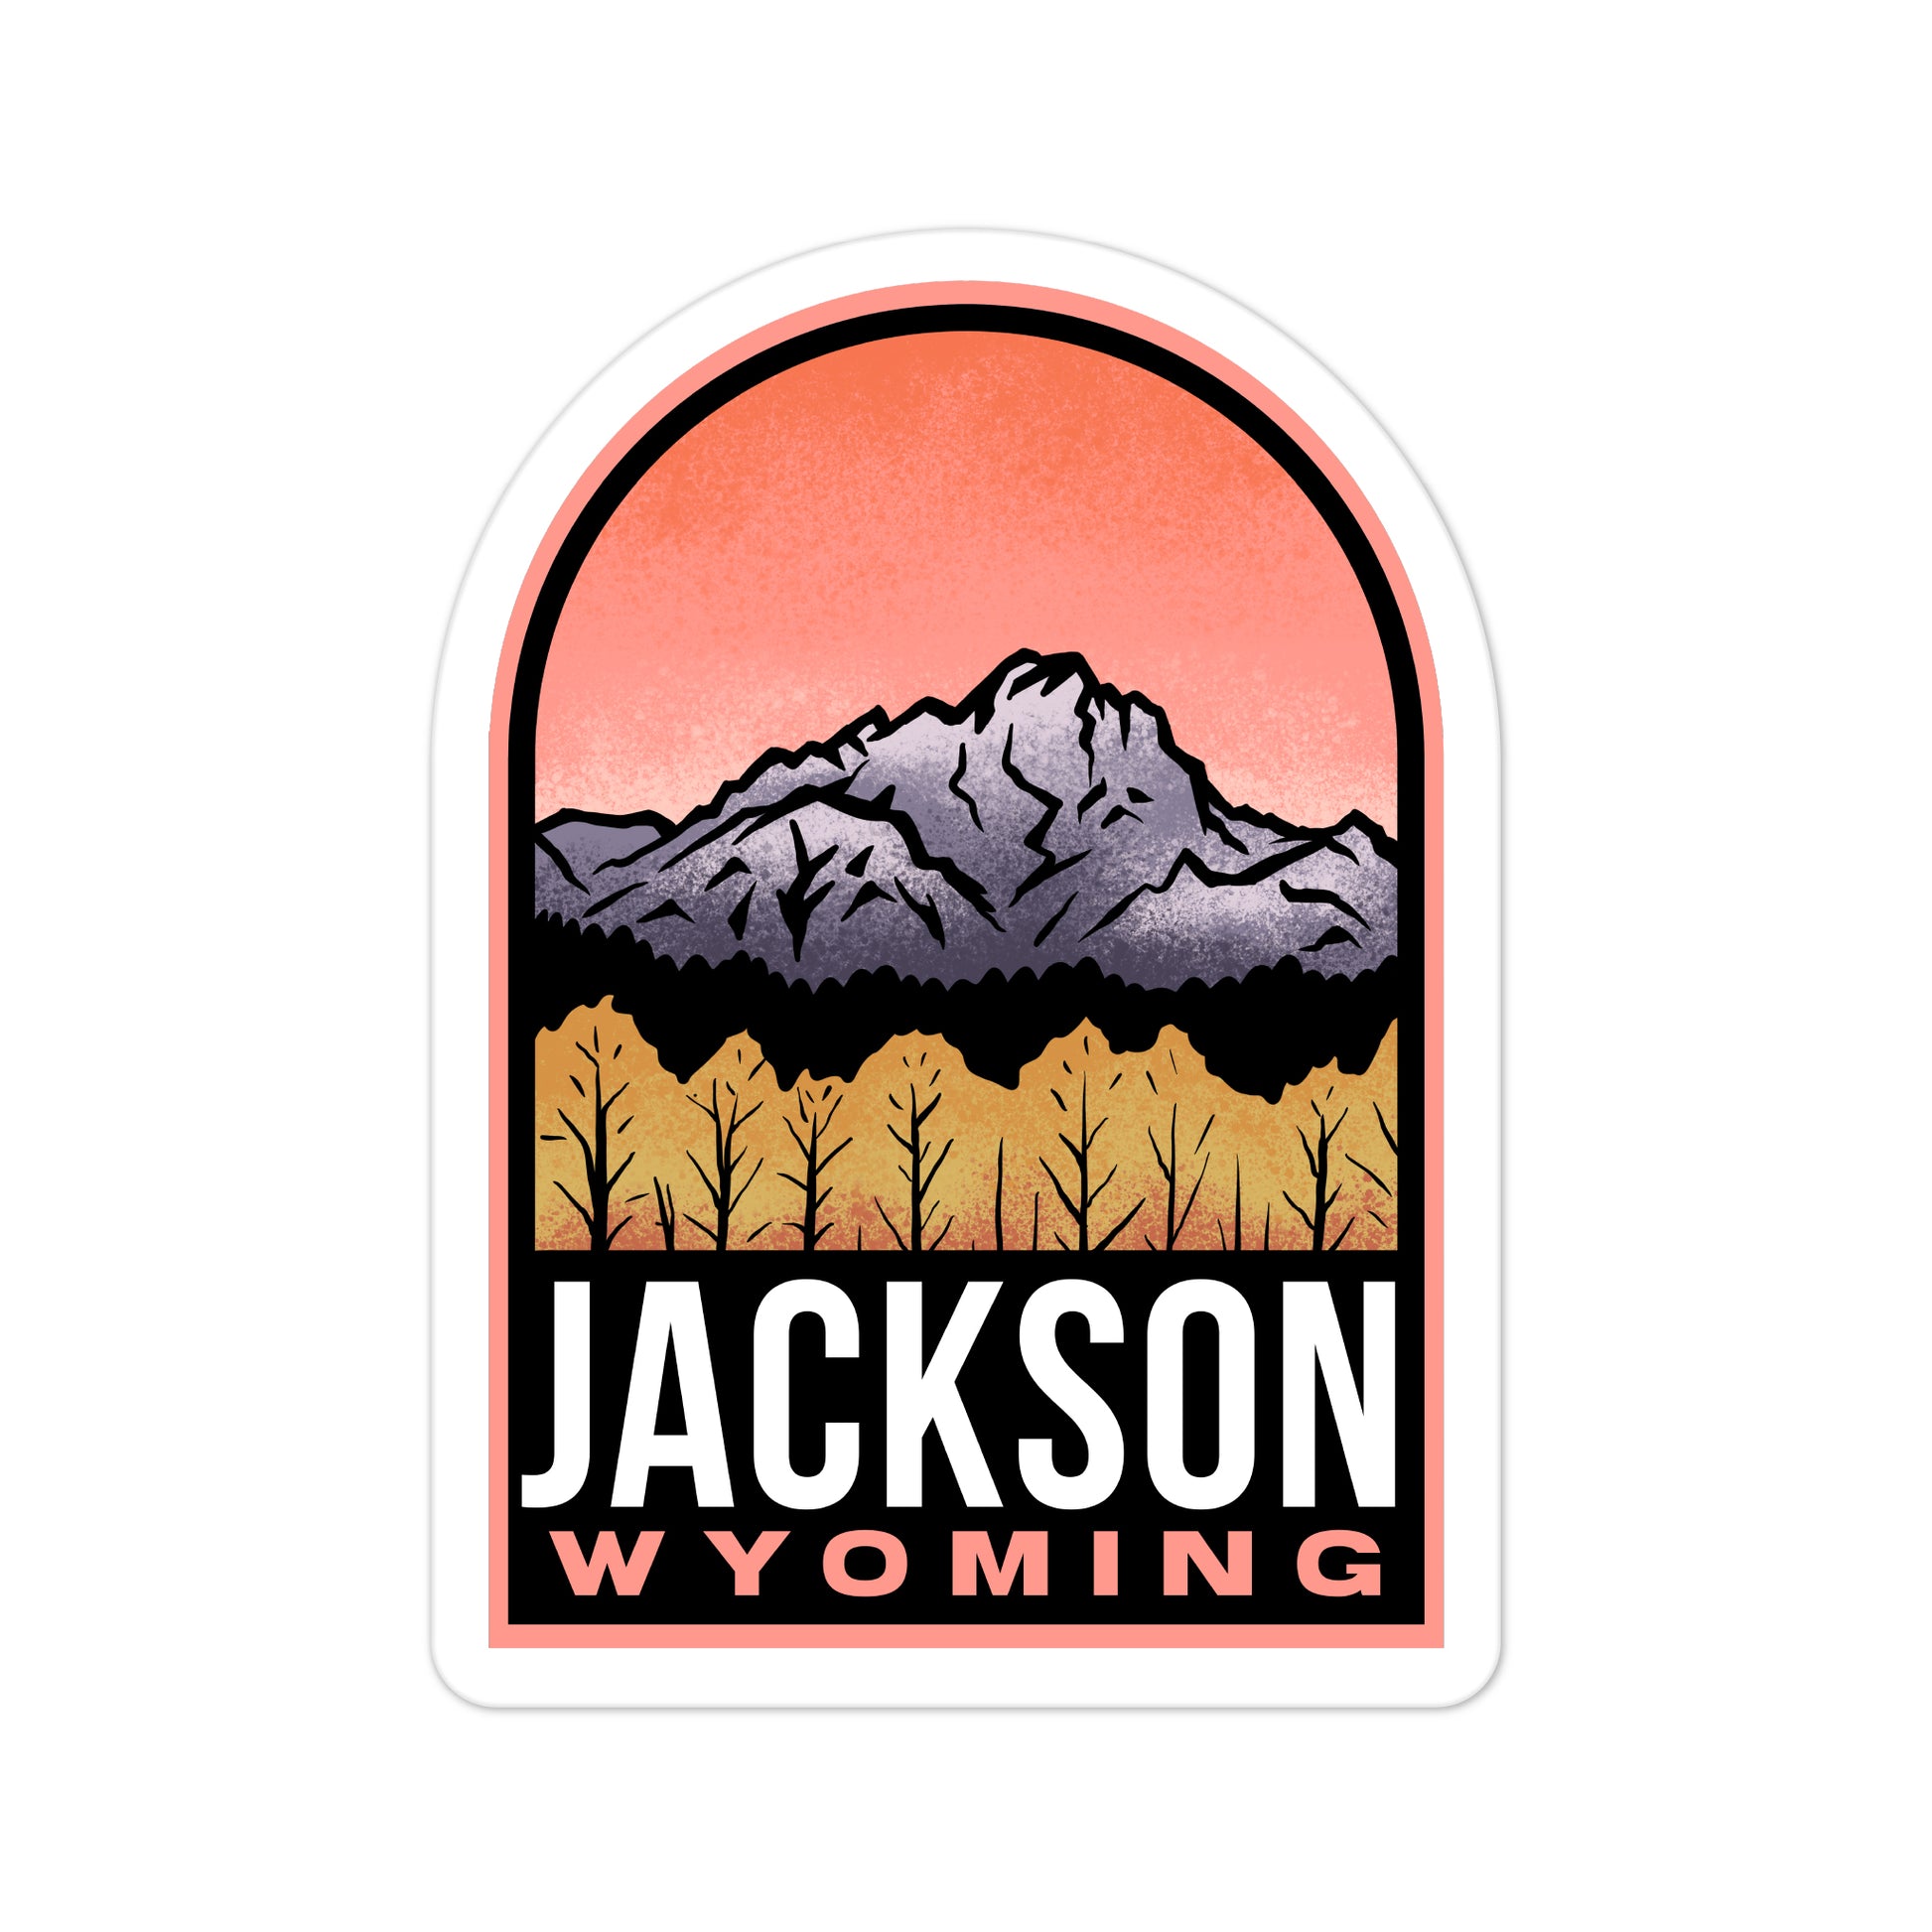 A sticker of Jackson Wyoming